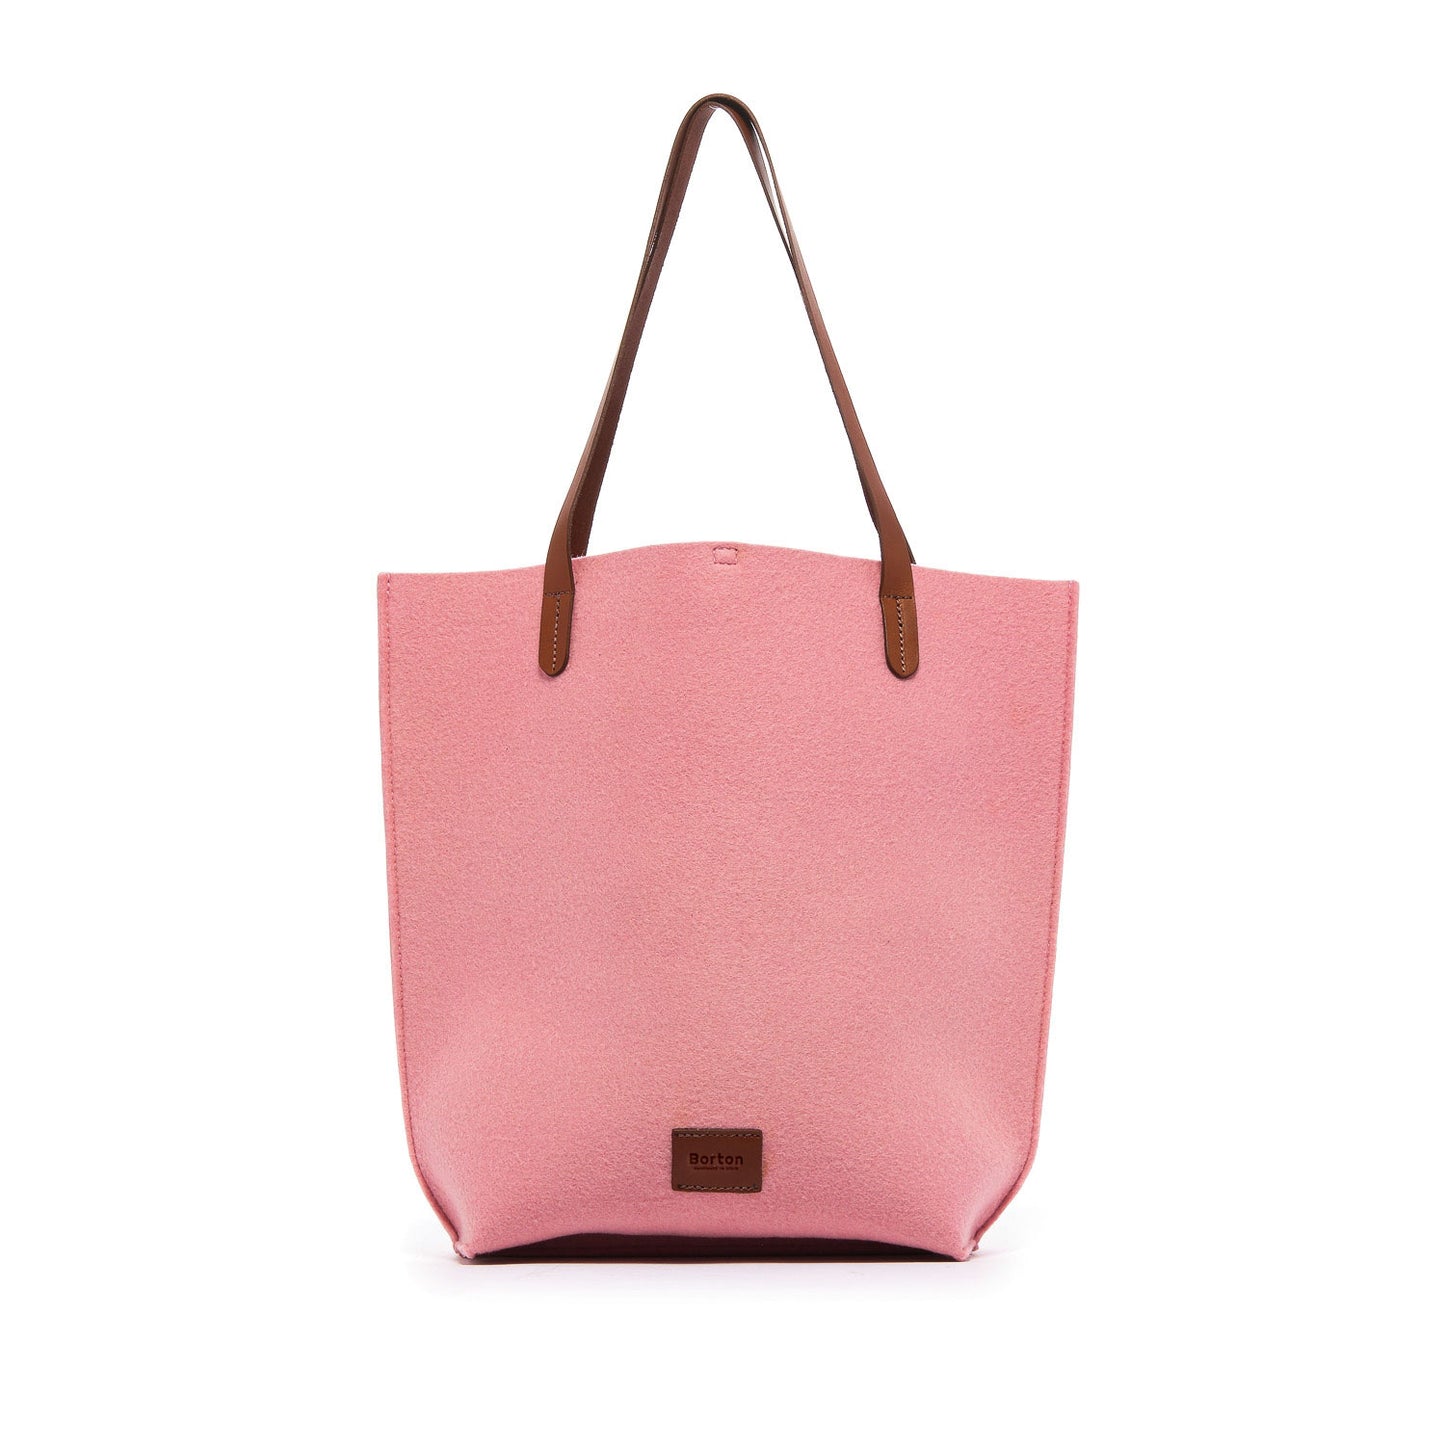 Mery Tote Bag Pink Felt & Tan Leather